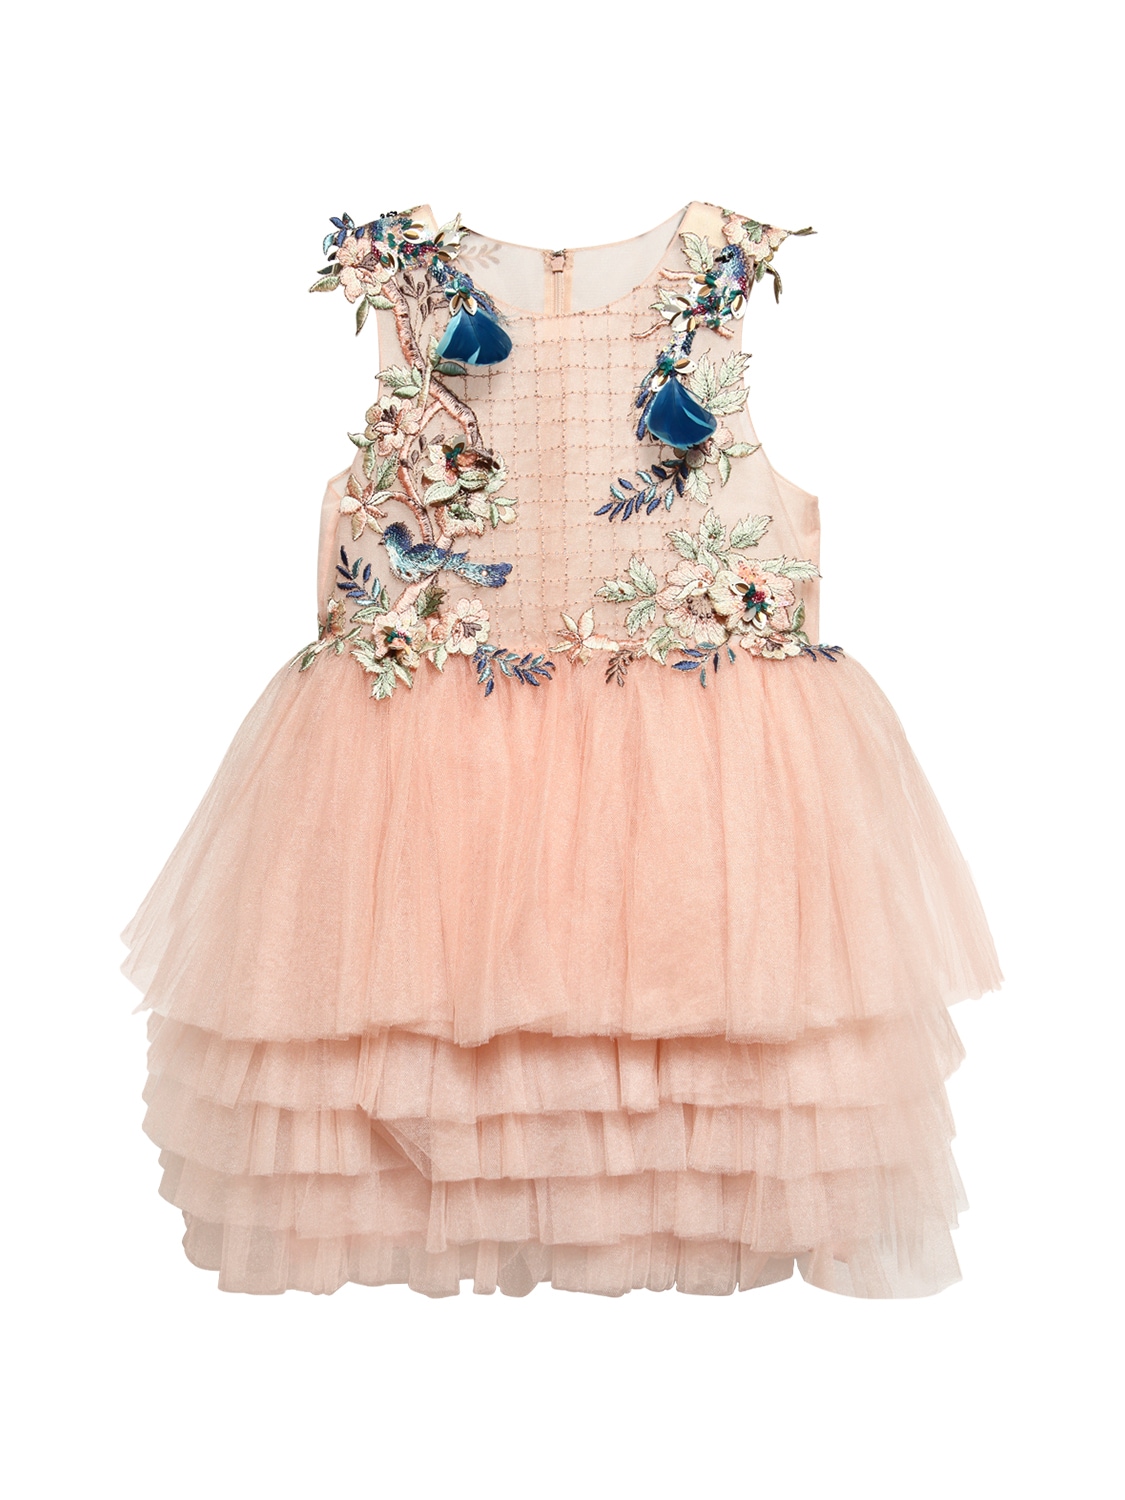 Mischka Aoki Flowers & Birds Embellished Tulle Dress